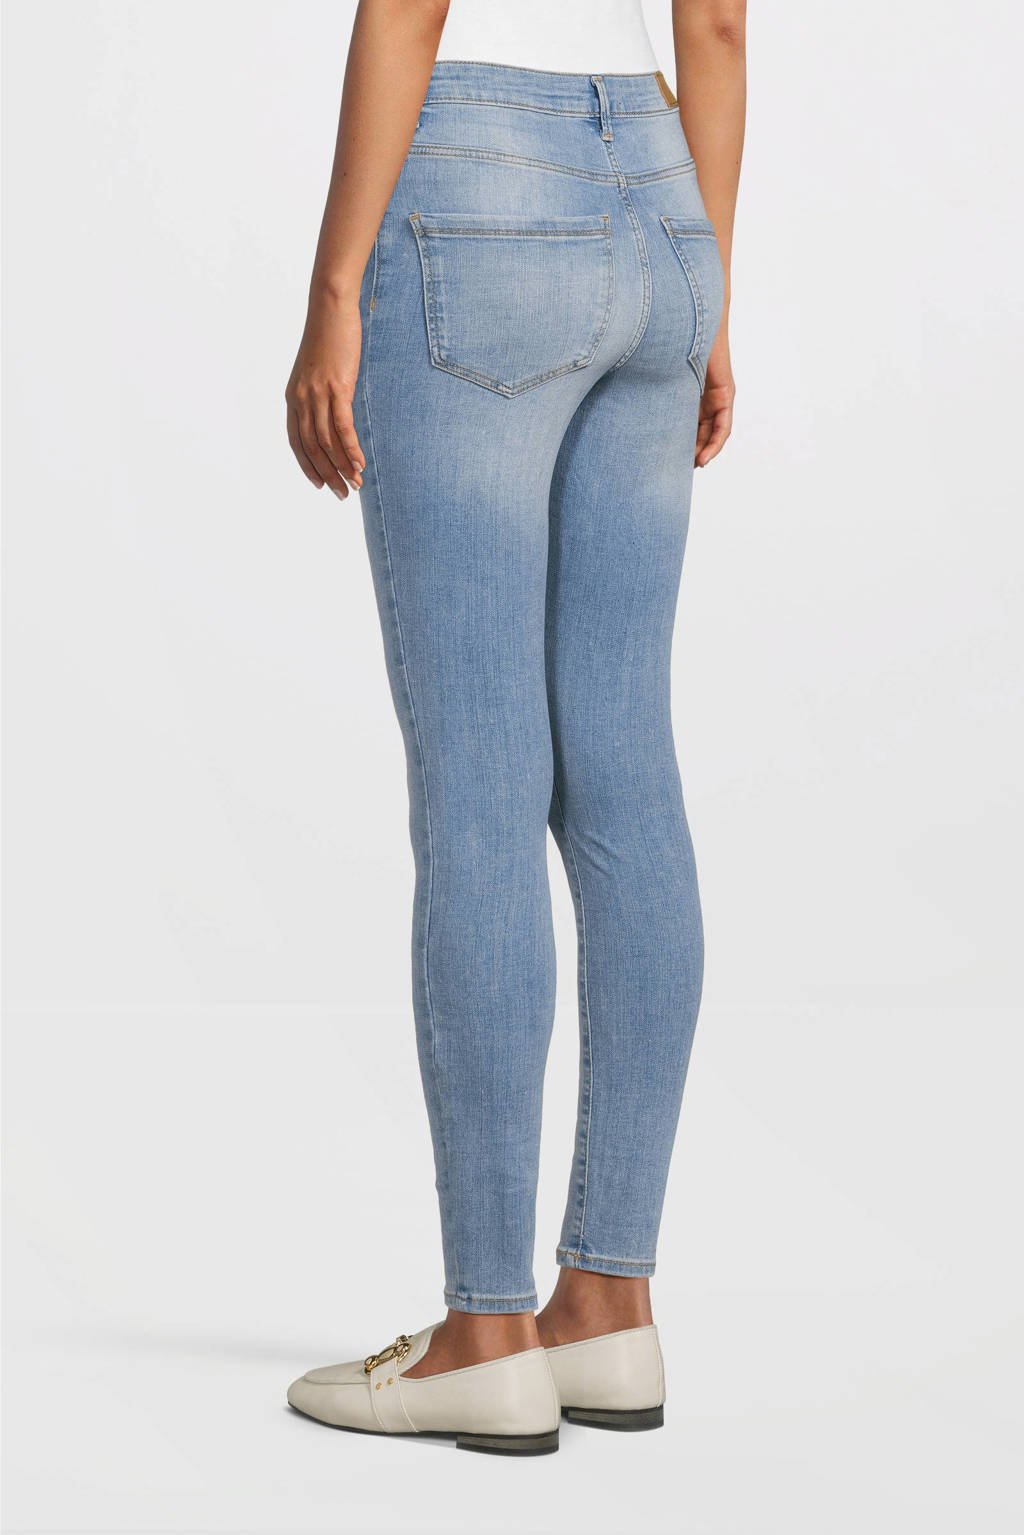 VERO MODA high waist skinny jeans VMSOPHIA light blue denim | wehkamp